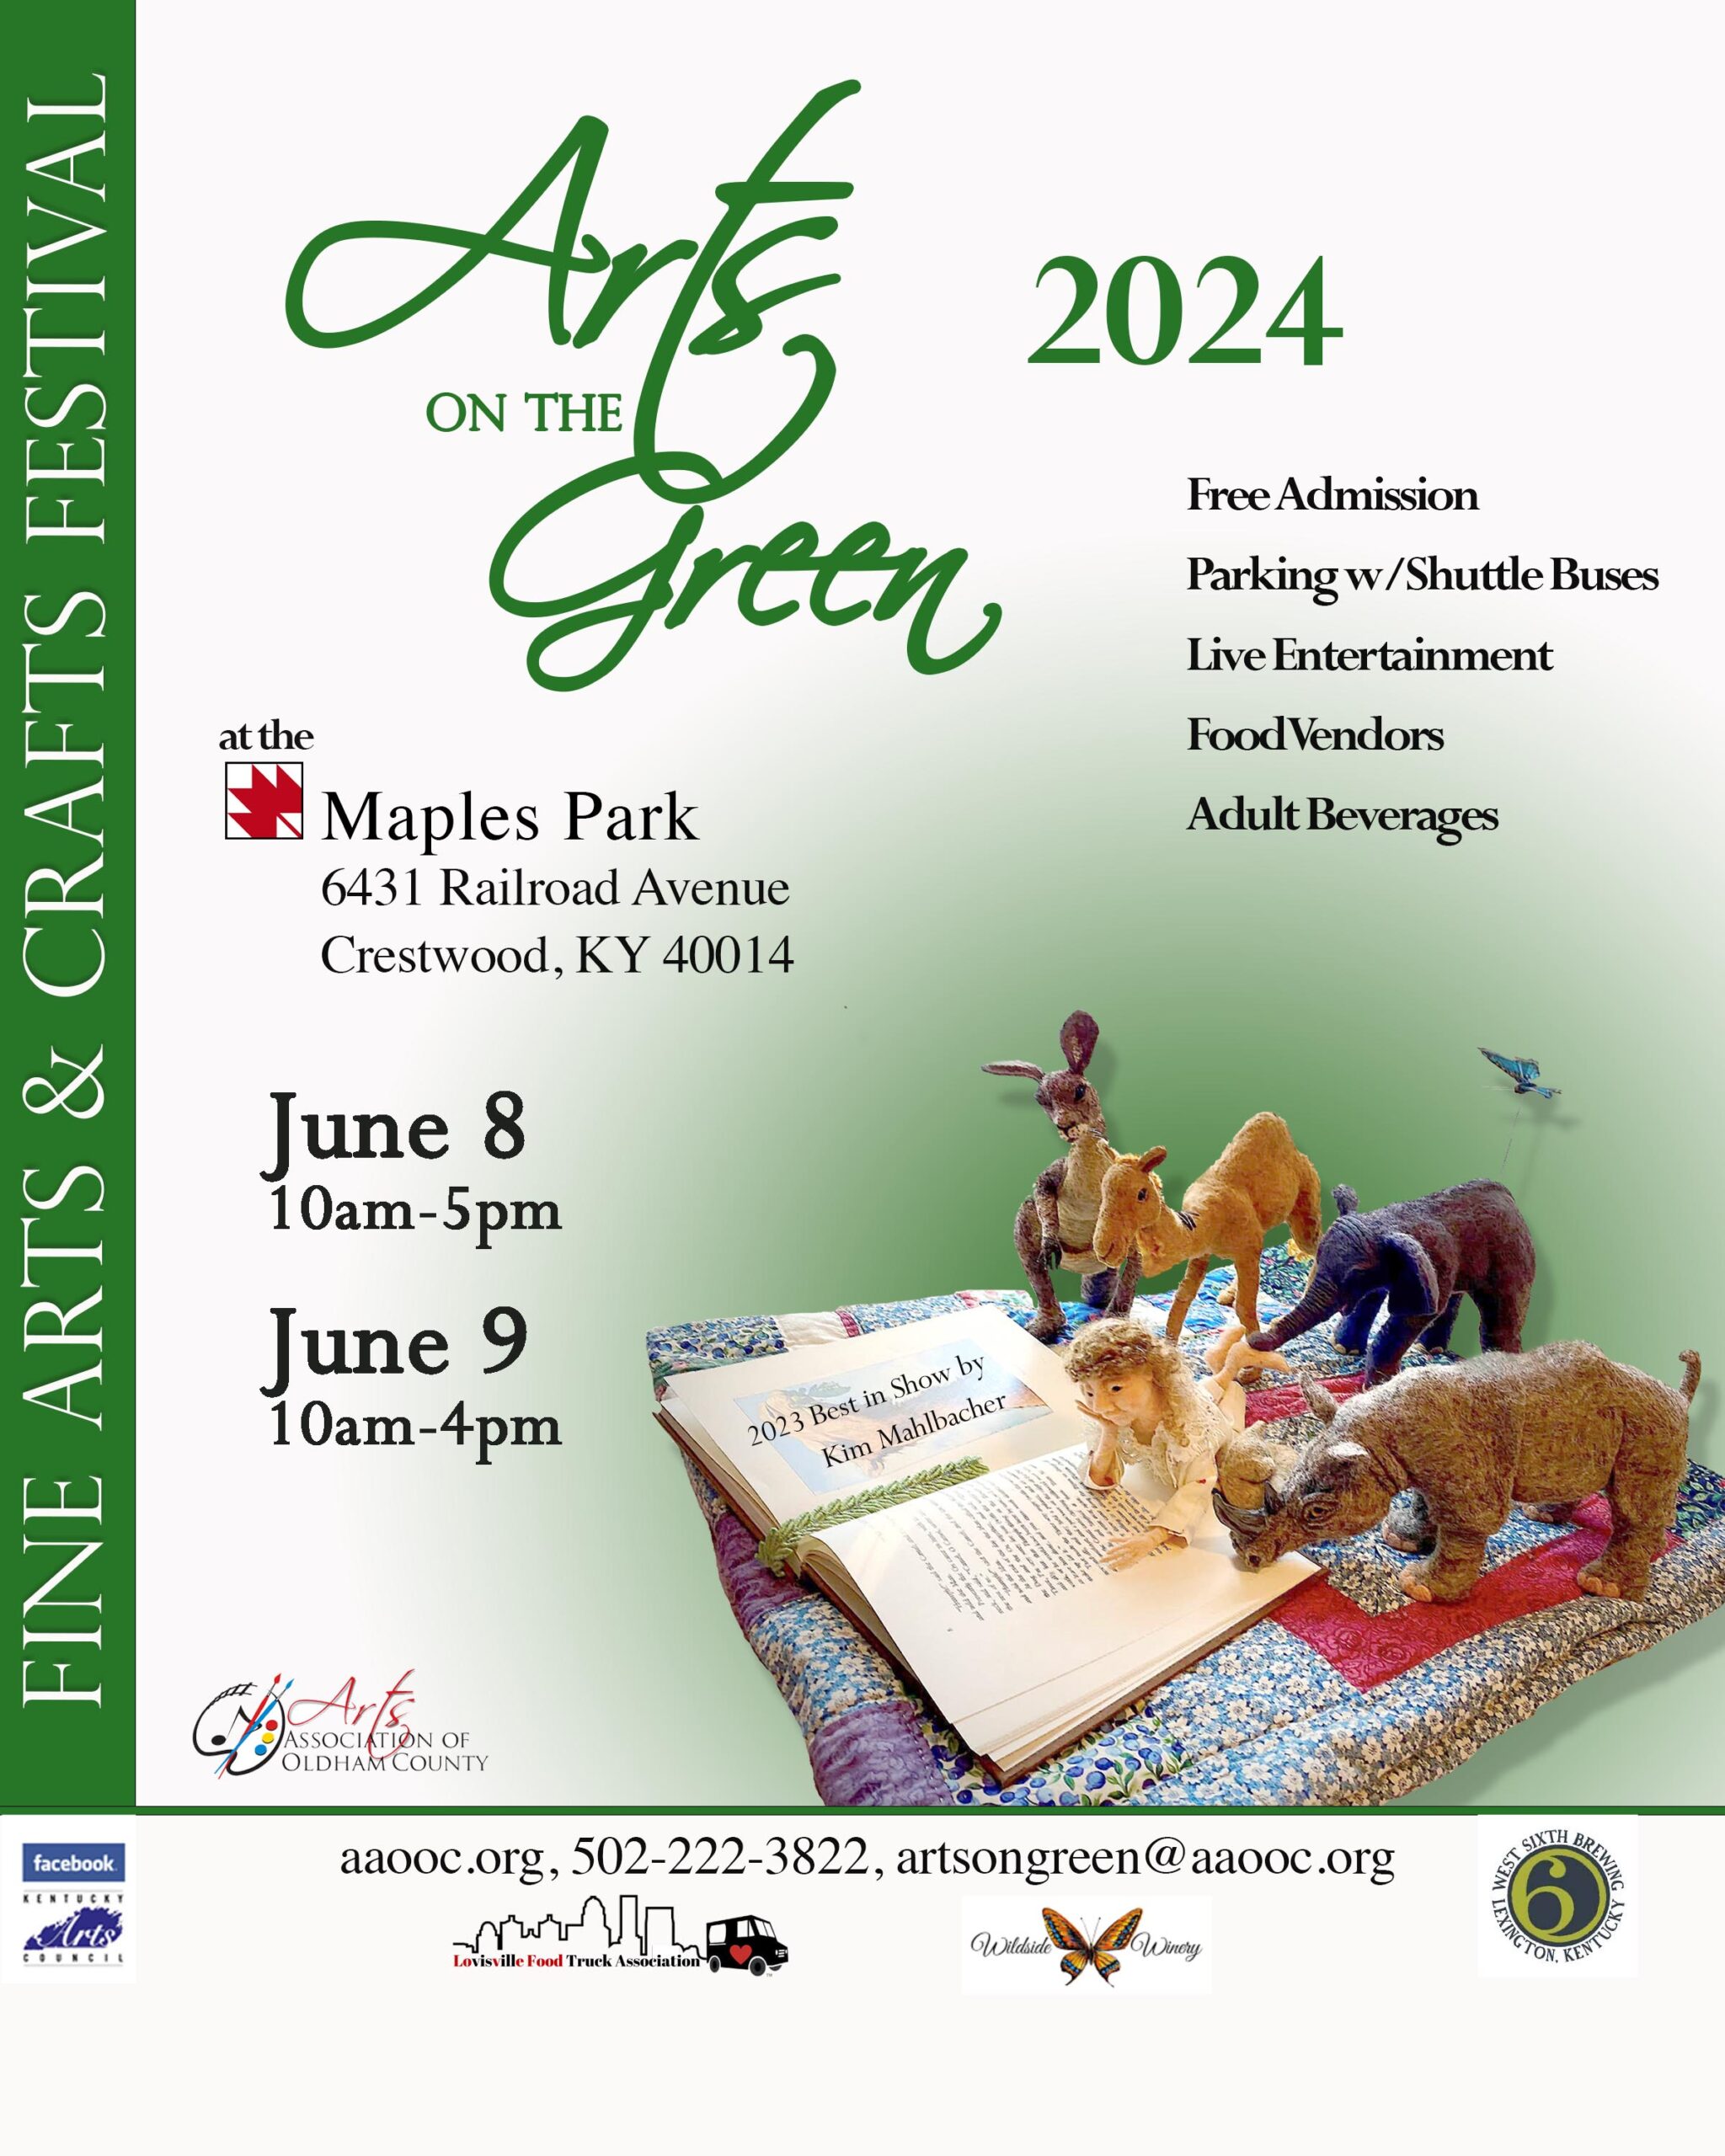 Arts & Crafts Green Poster